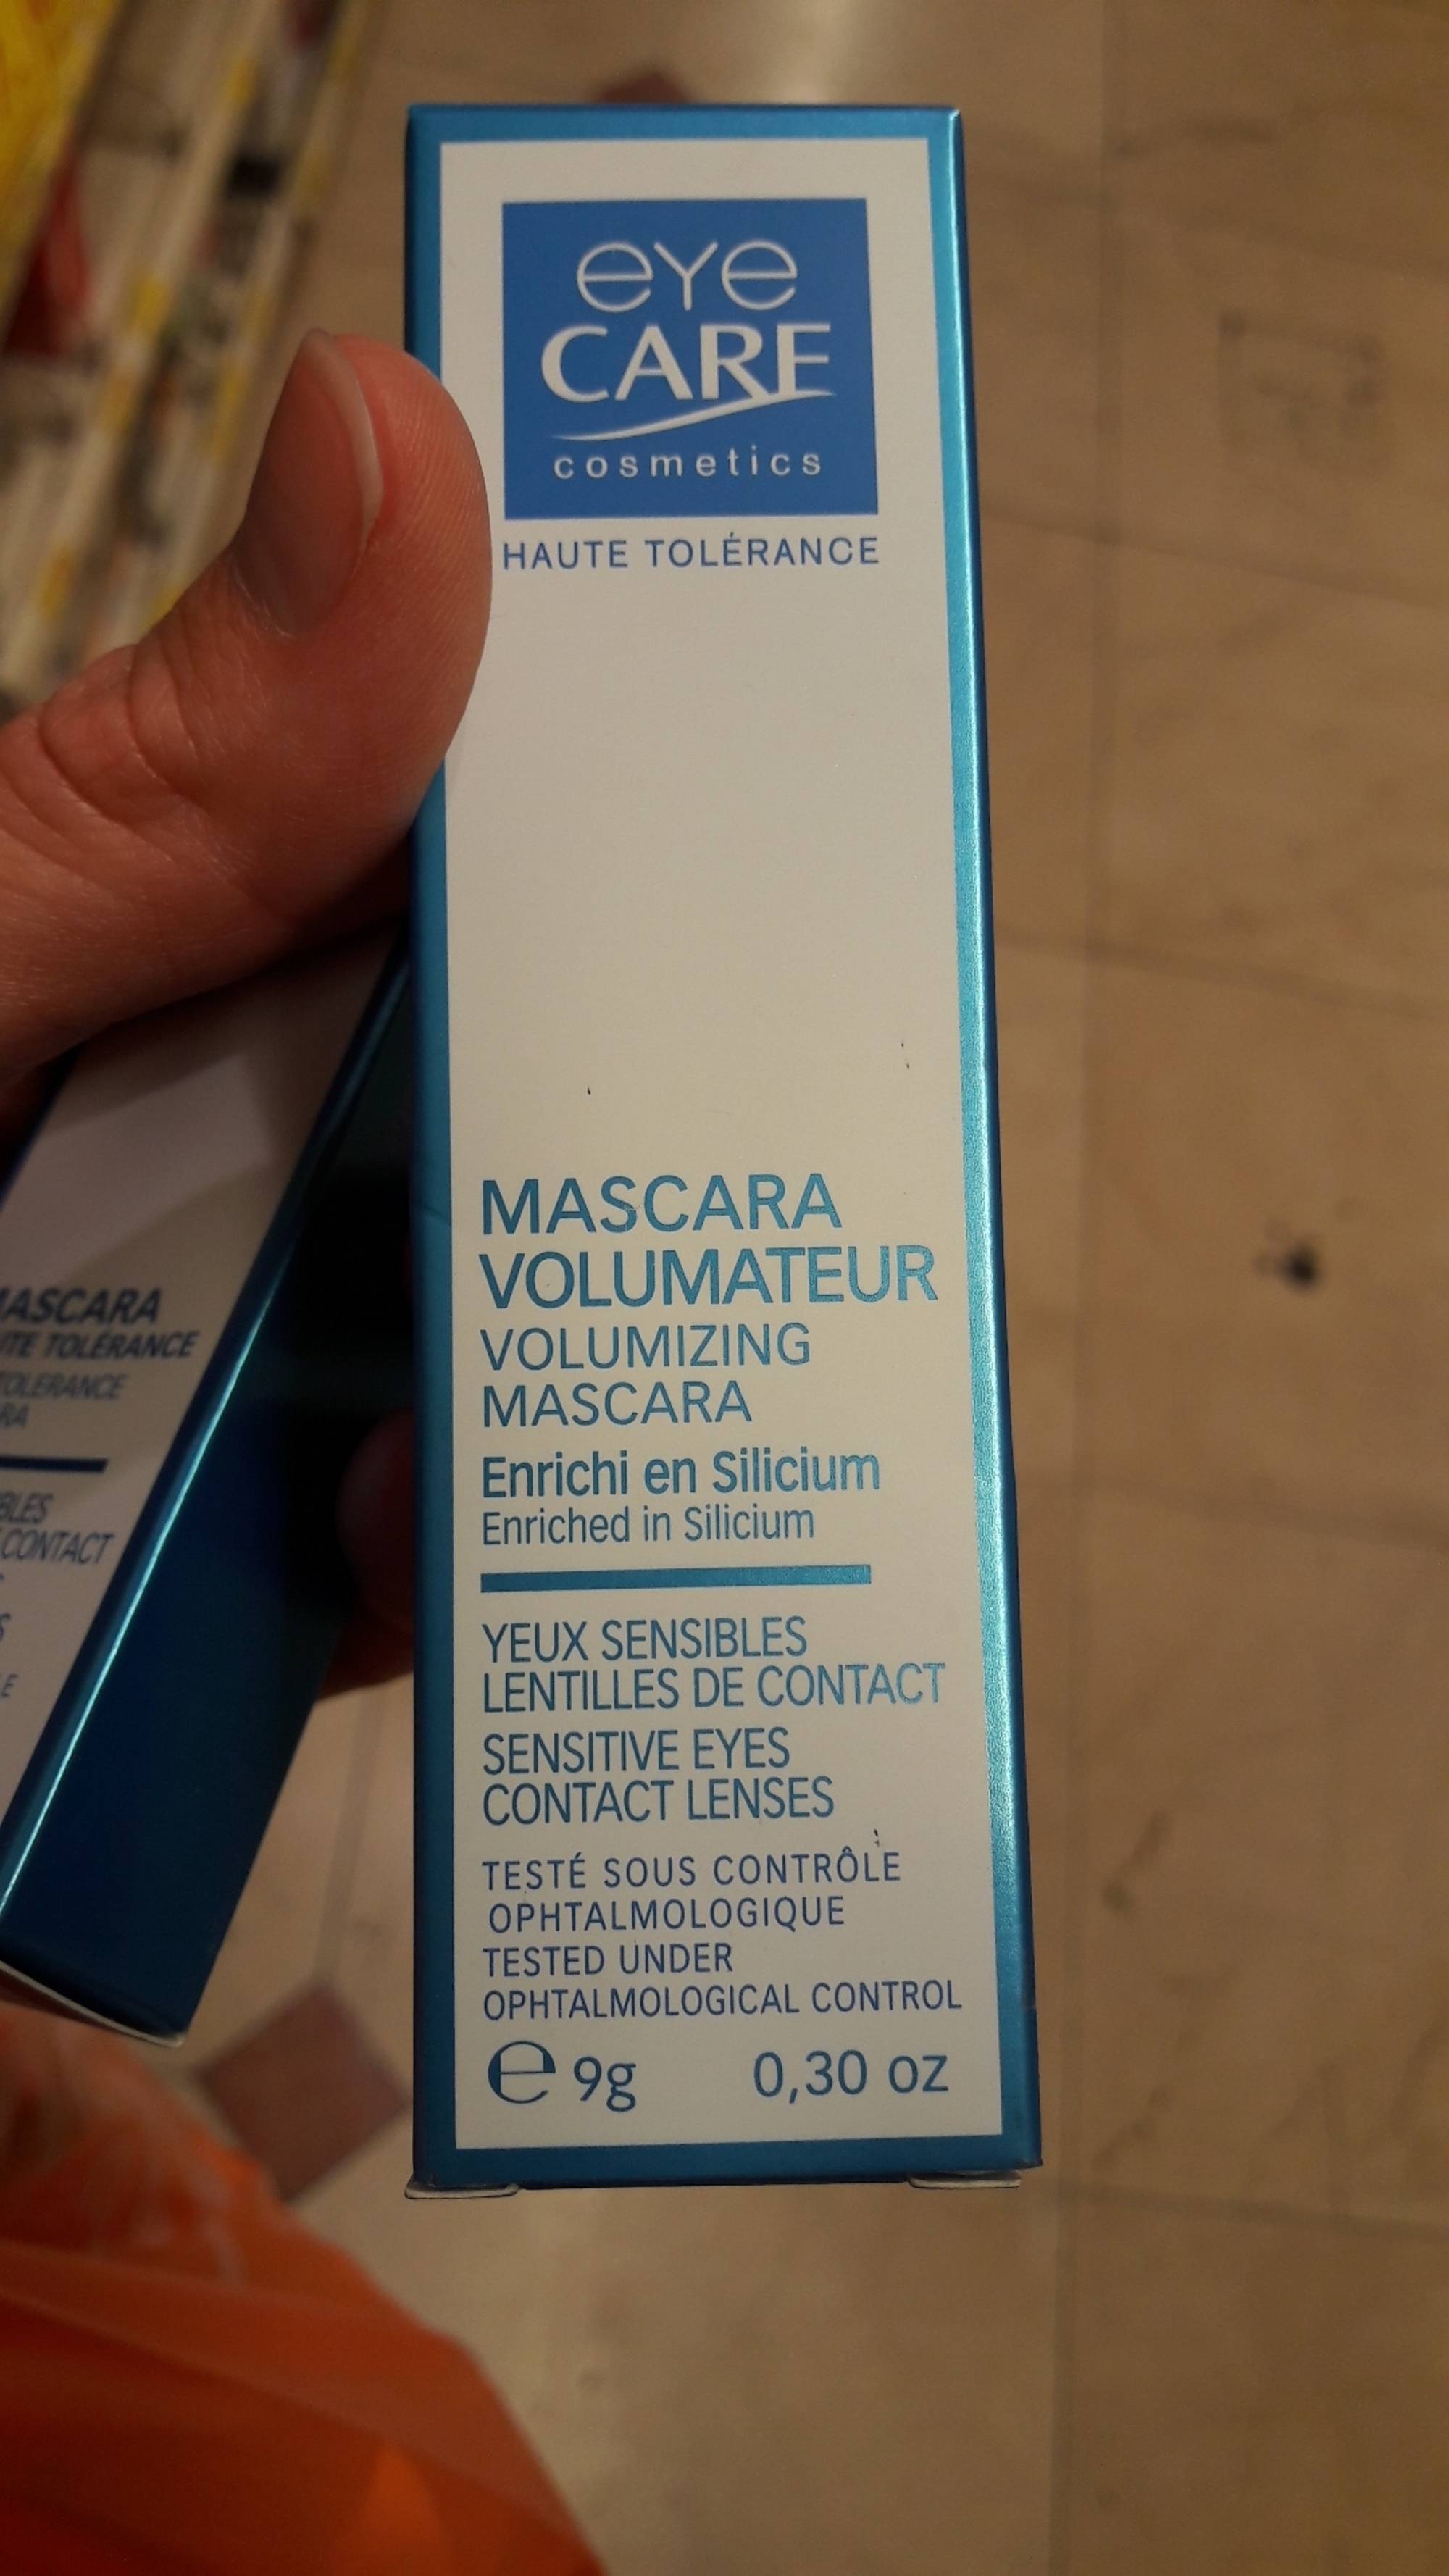 EYE CARE - Mascara volumateur